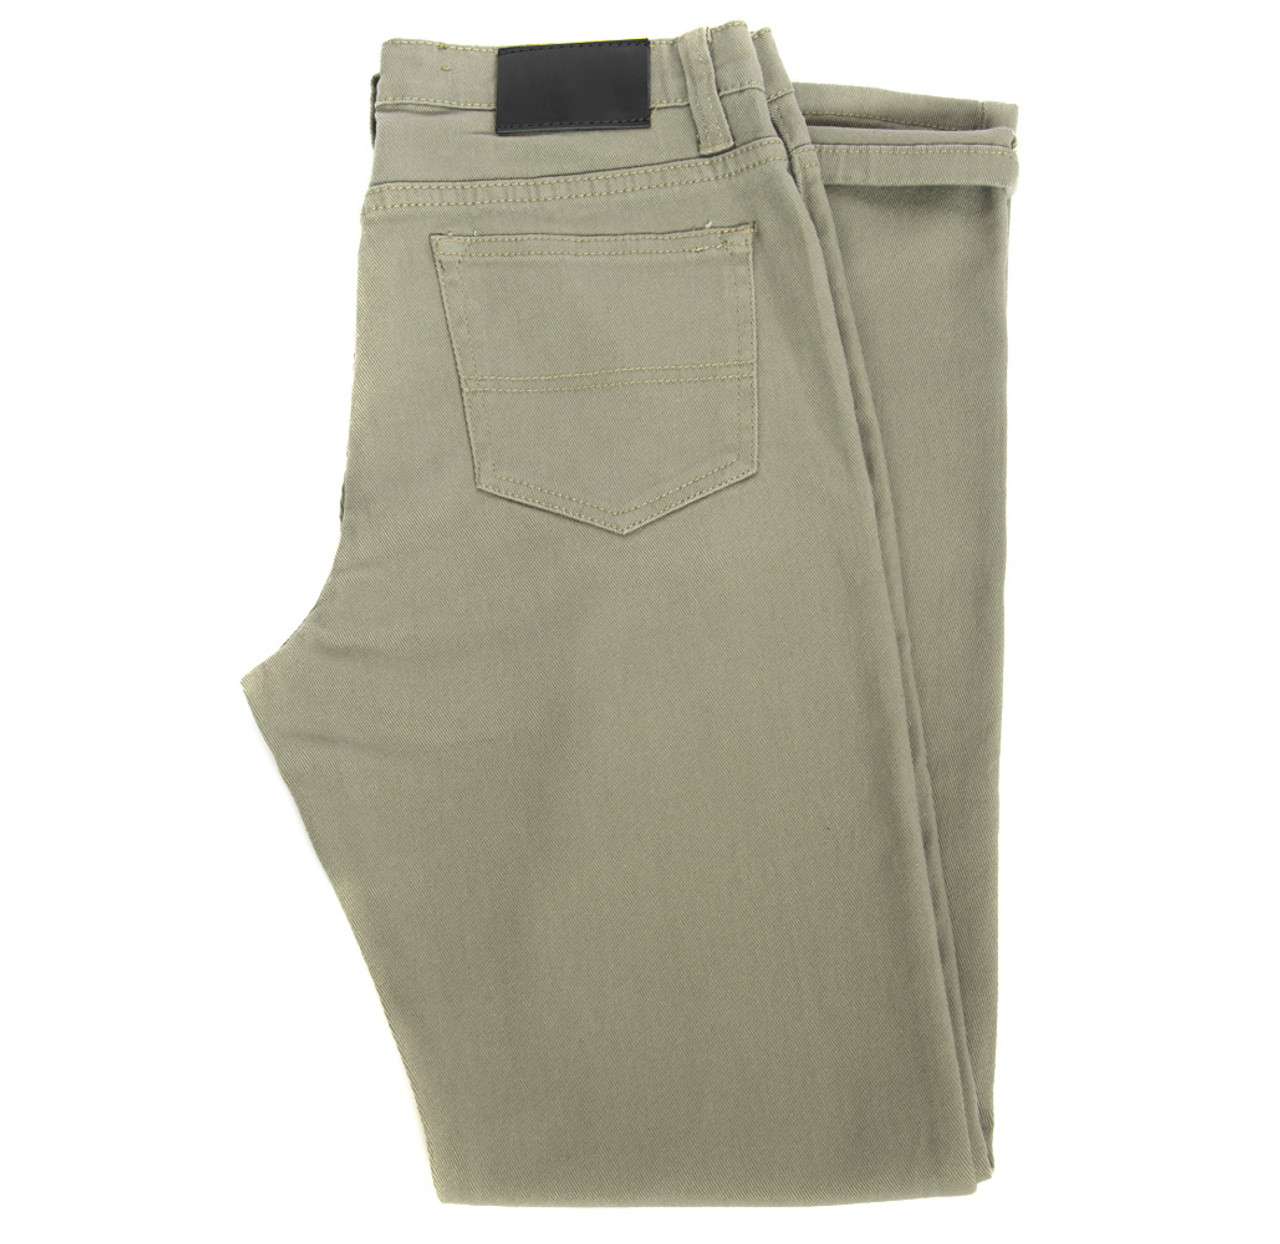 Alta Men's Slim Fit Skinny Denim Jeans product image